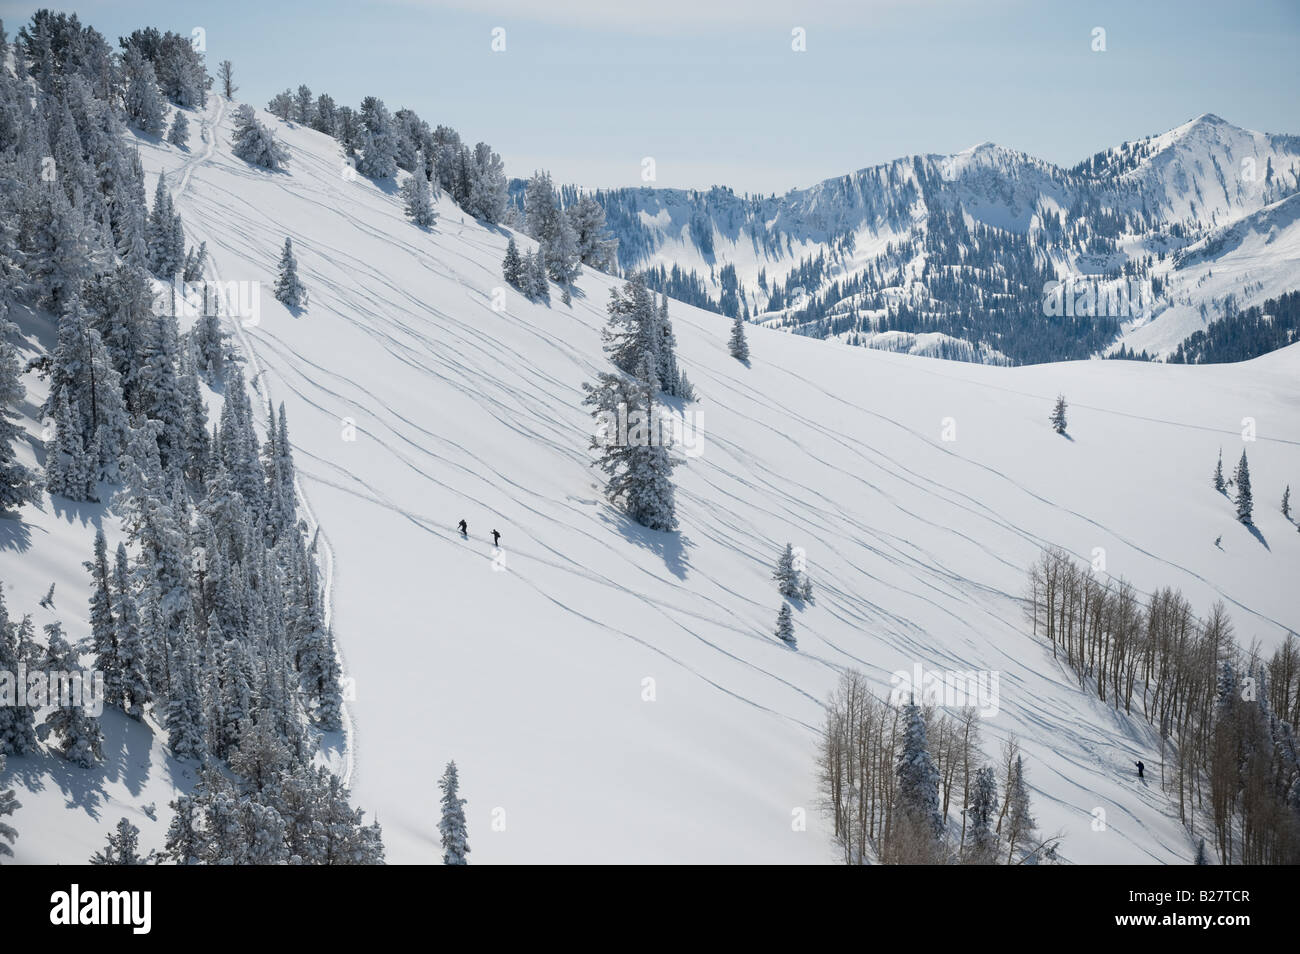 Skiers on mountain, Wasatch Mountains, Utah, United States Stock Photo